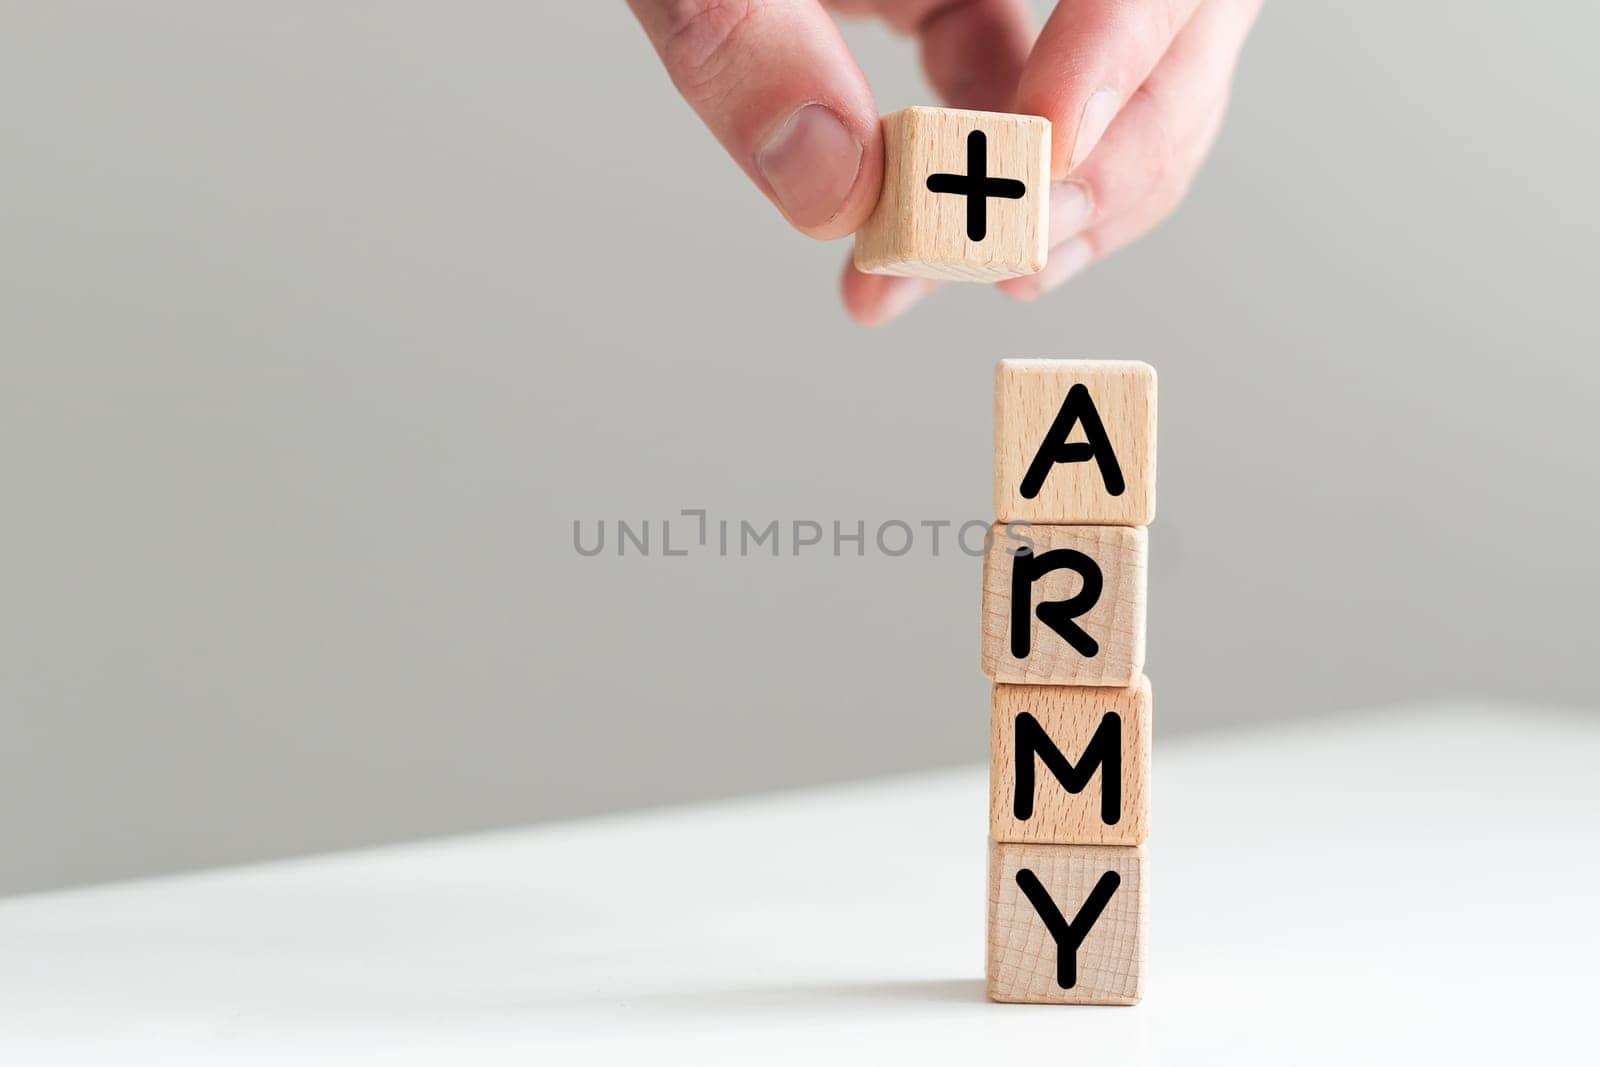 dot army - internet domain for army by Andelov13